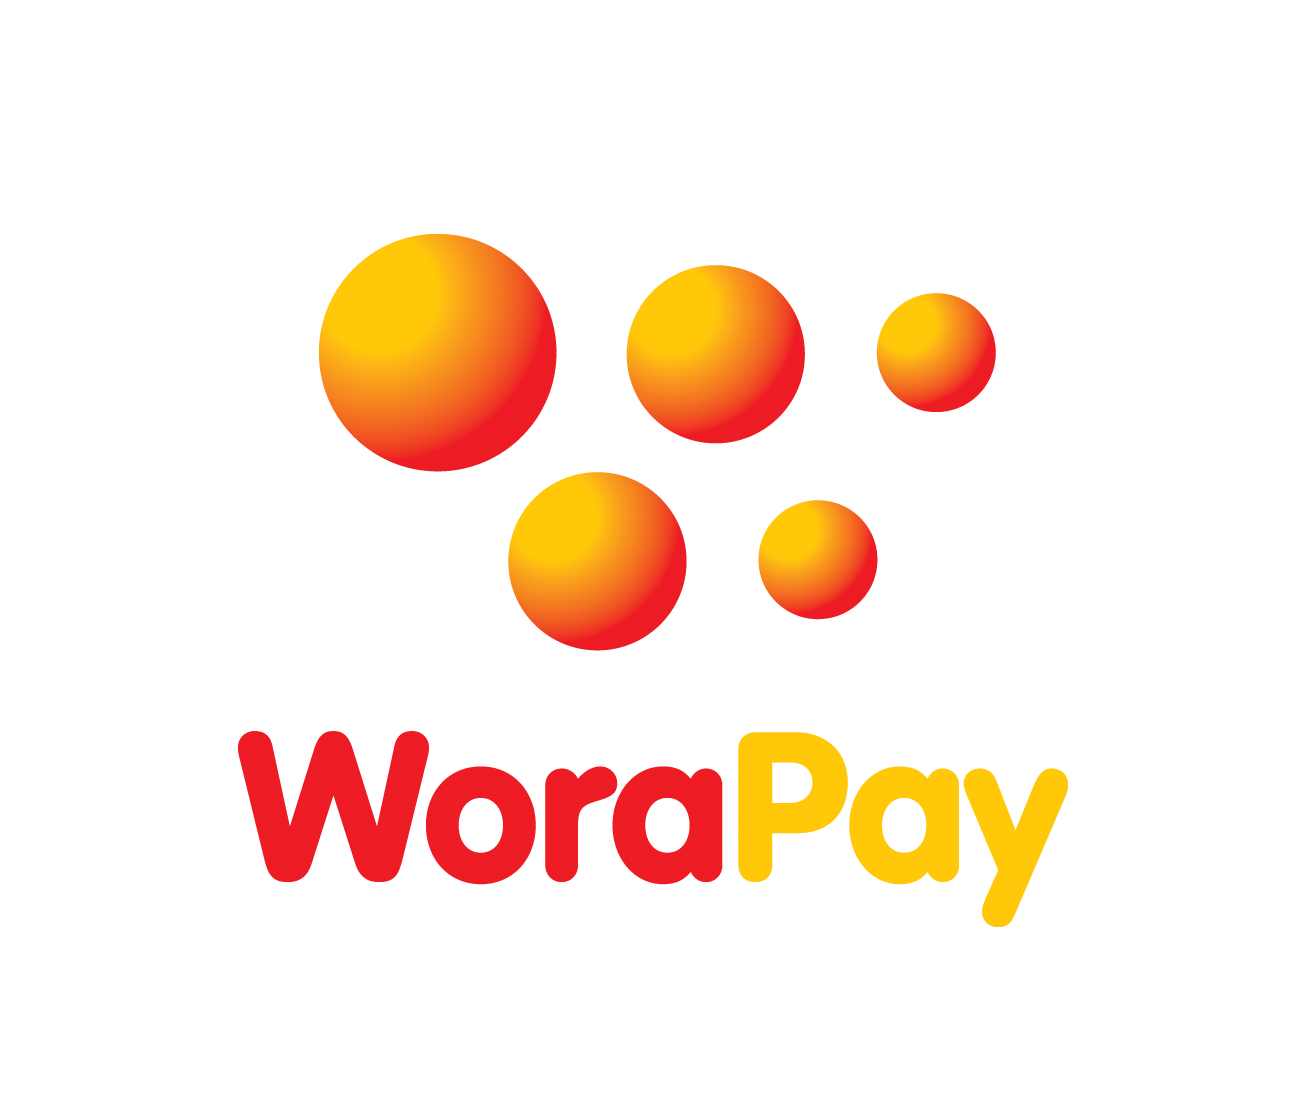 Worapay